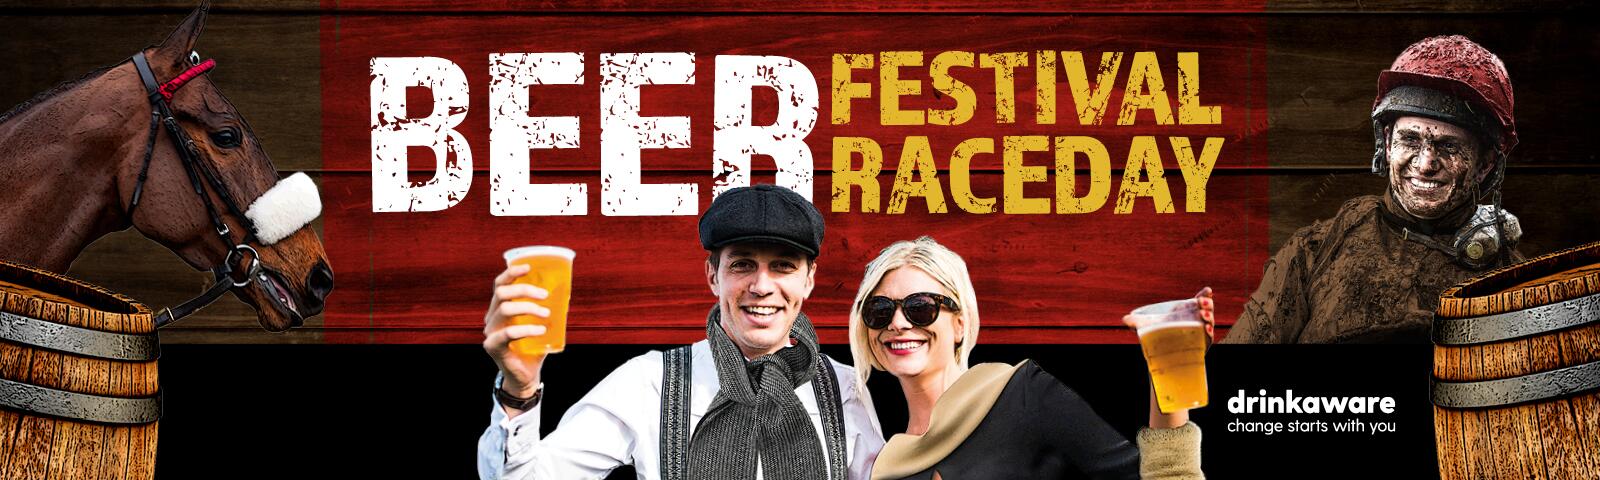 Beer Festival Raceday